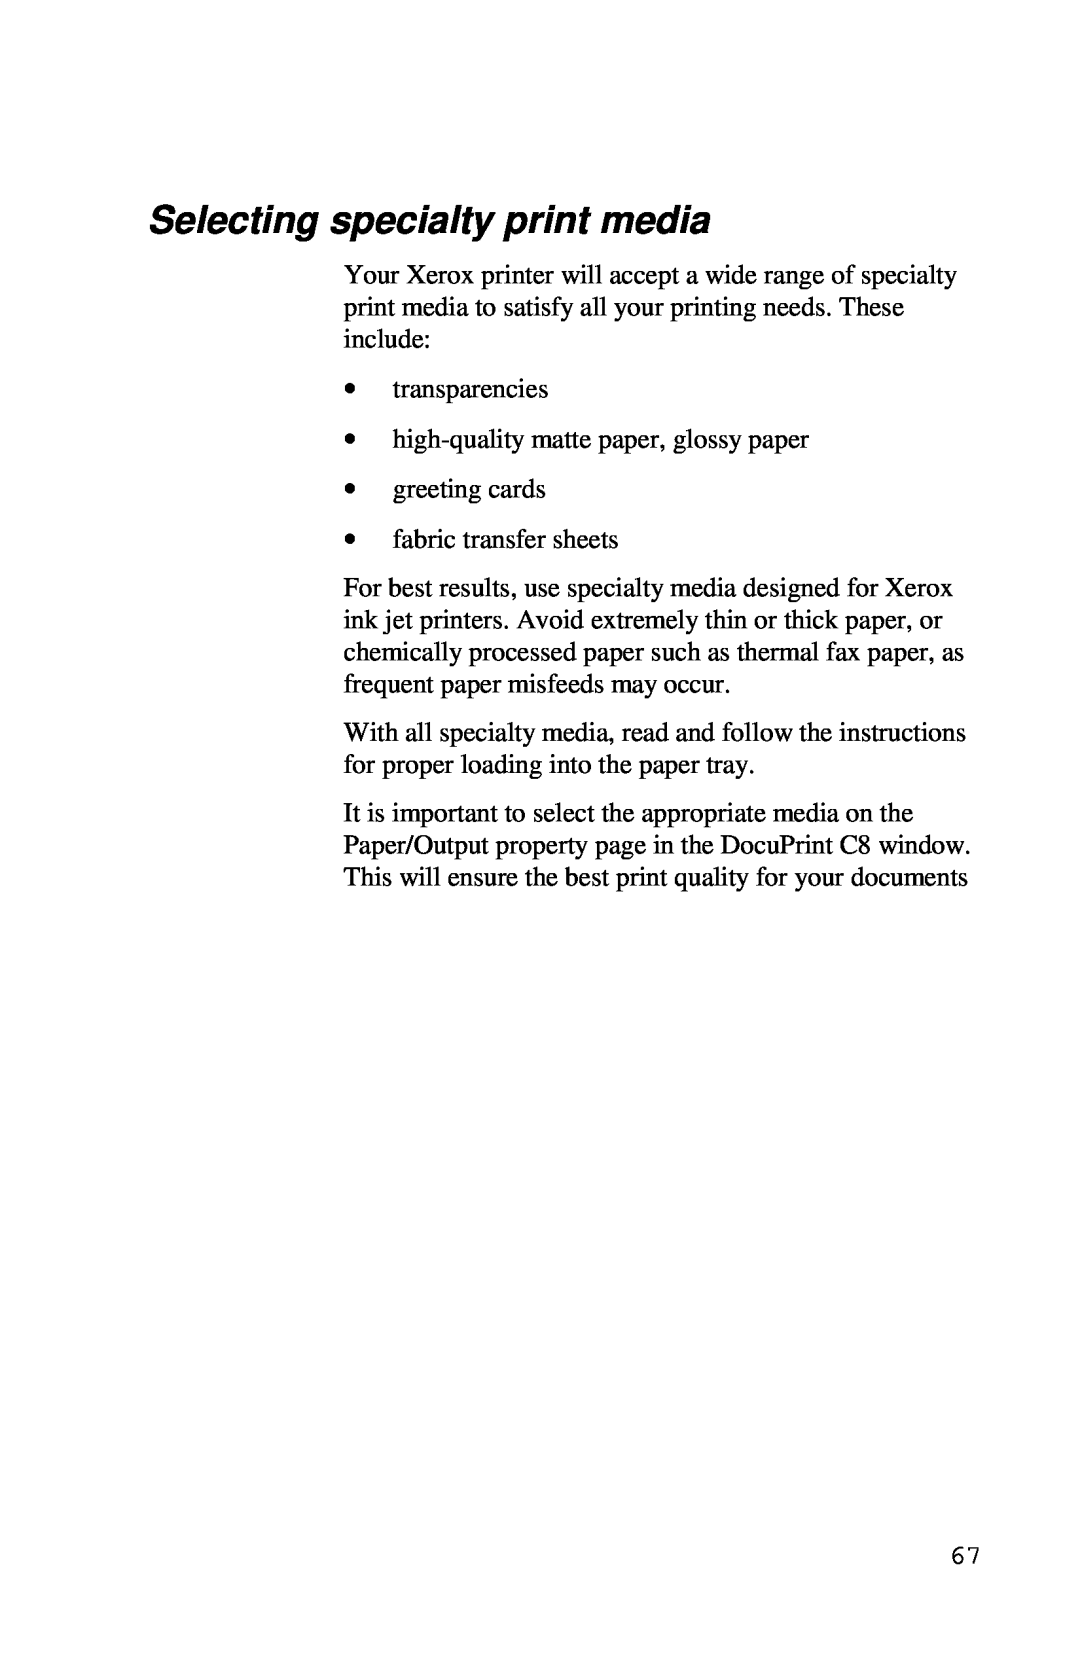 Xerox Inkjet Printer manual Selecting specialty print media 